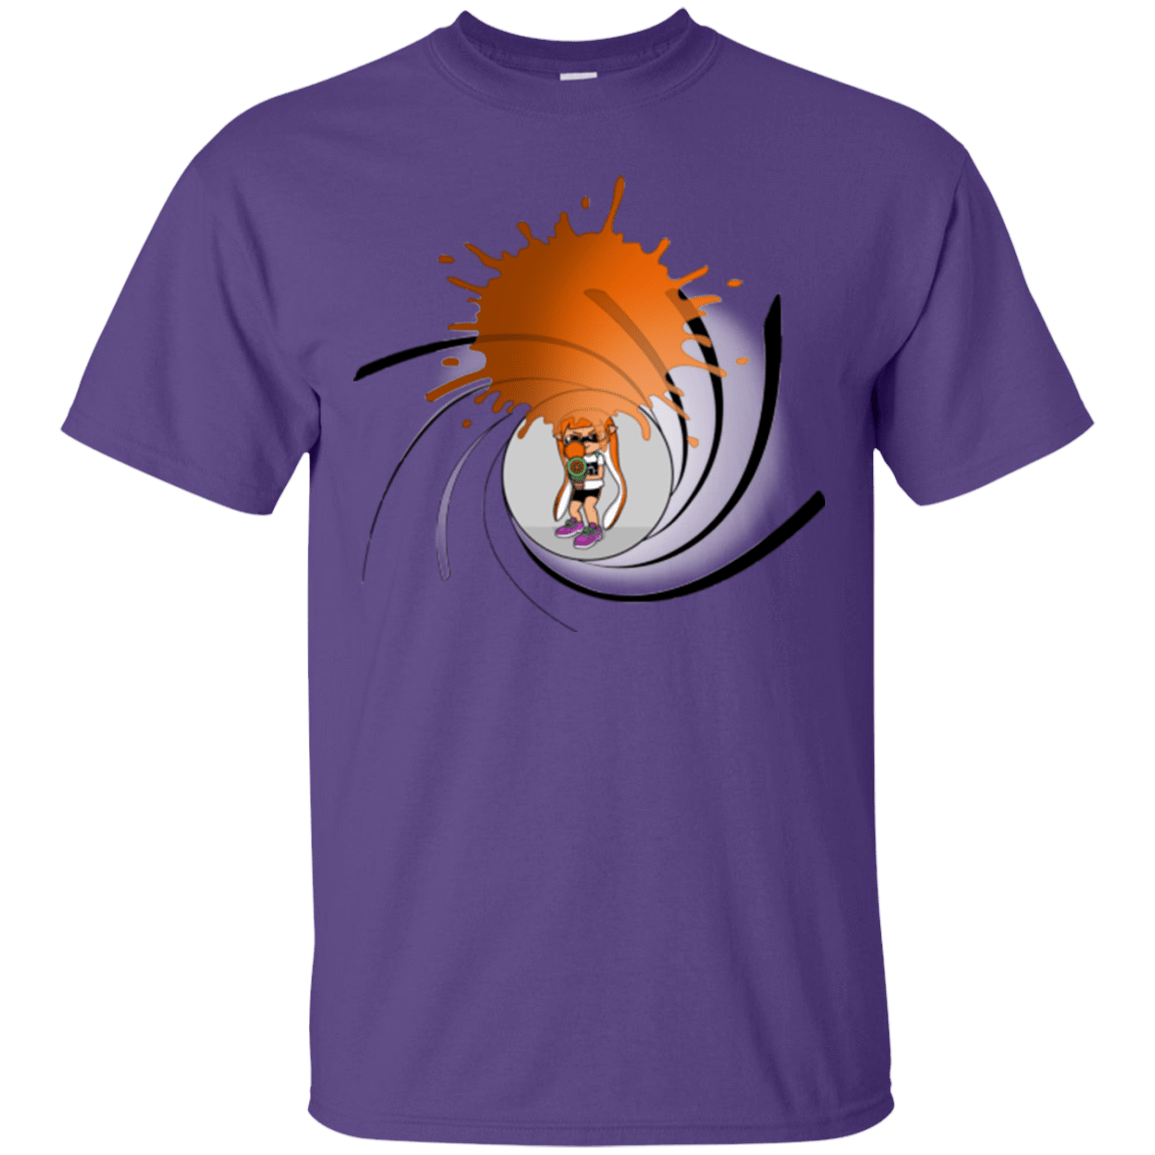 T-Shirts Purple / Small Splat 007 T-Shirt